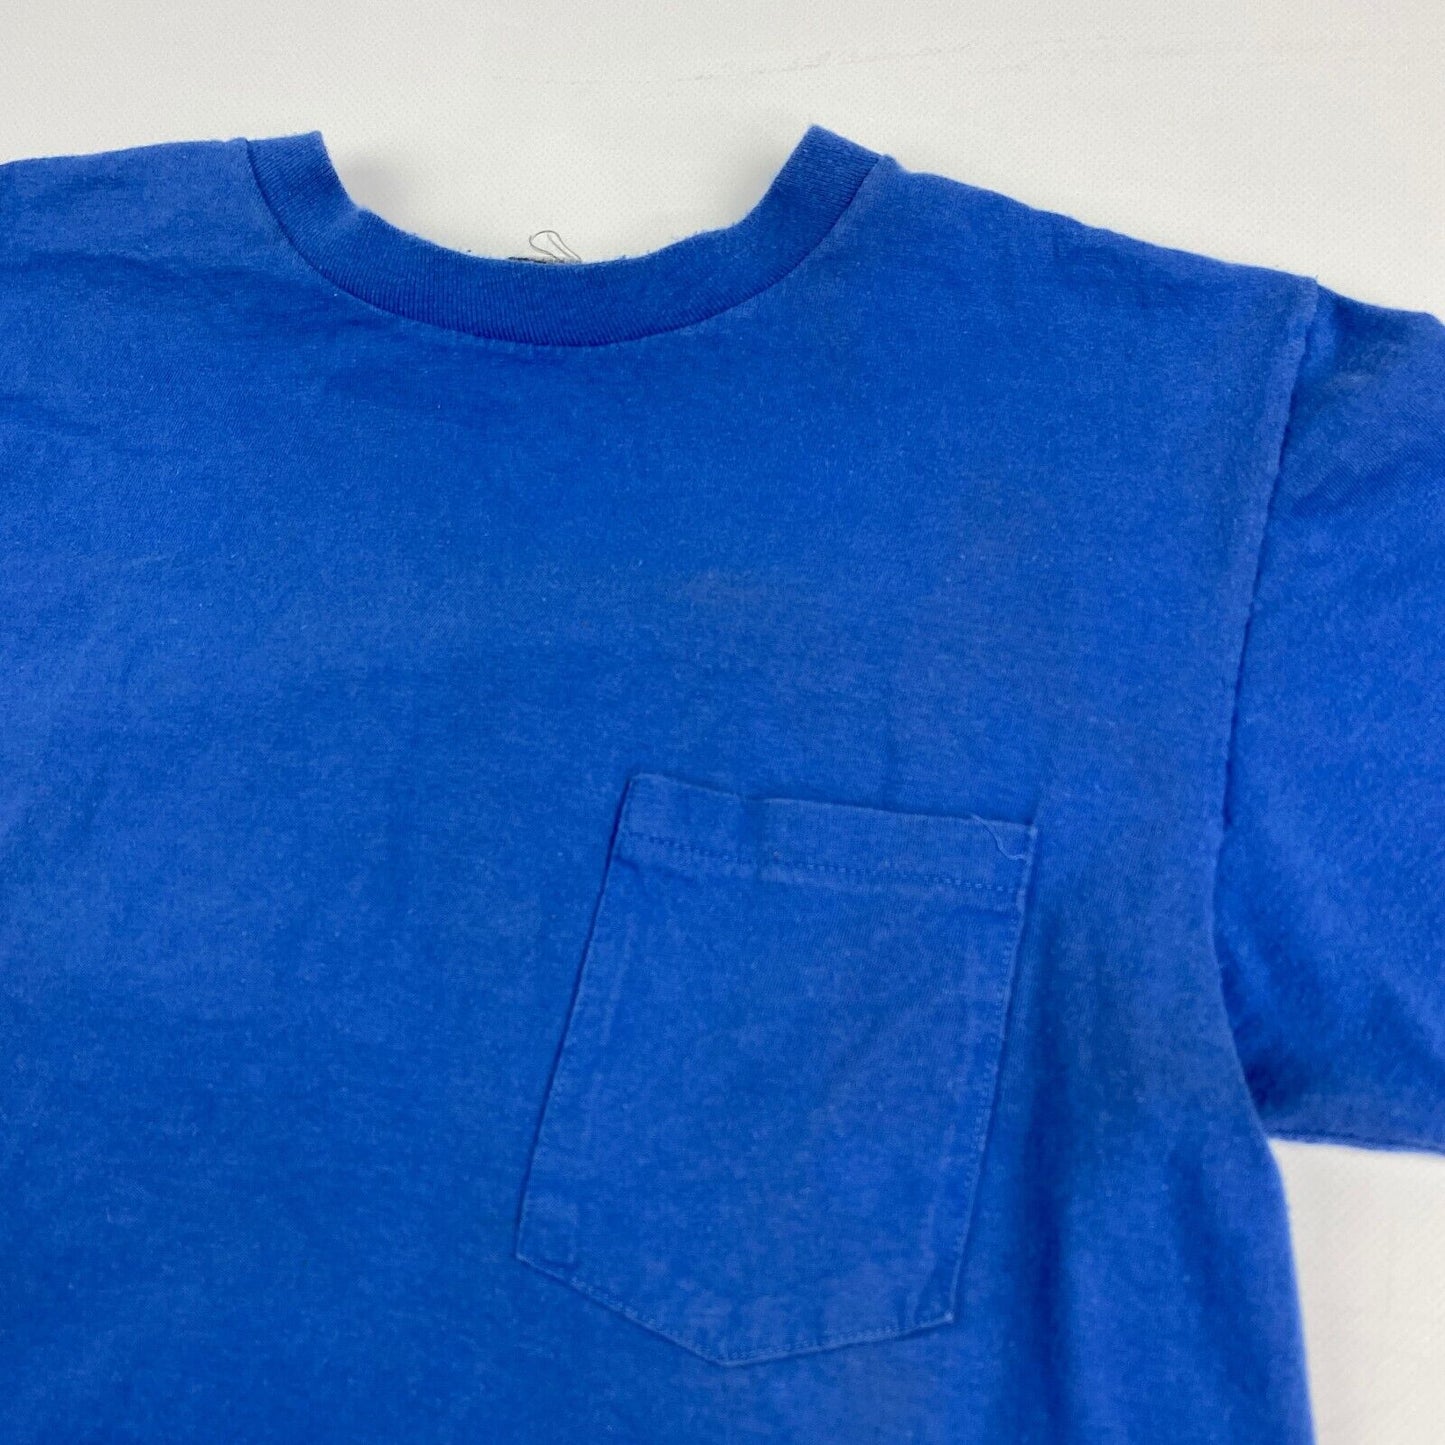 VINTAGE 80s Hunting Excuse Blue Pocket T-Shirt sz Small Men